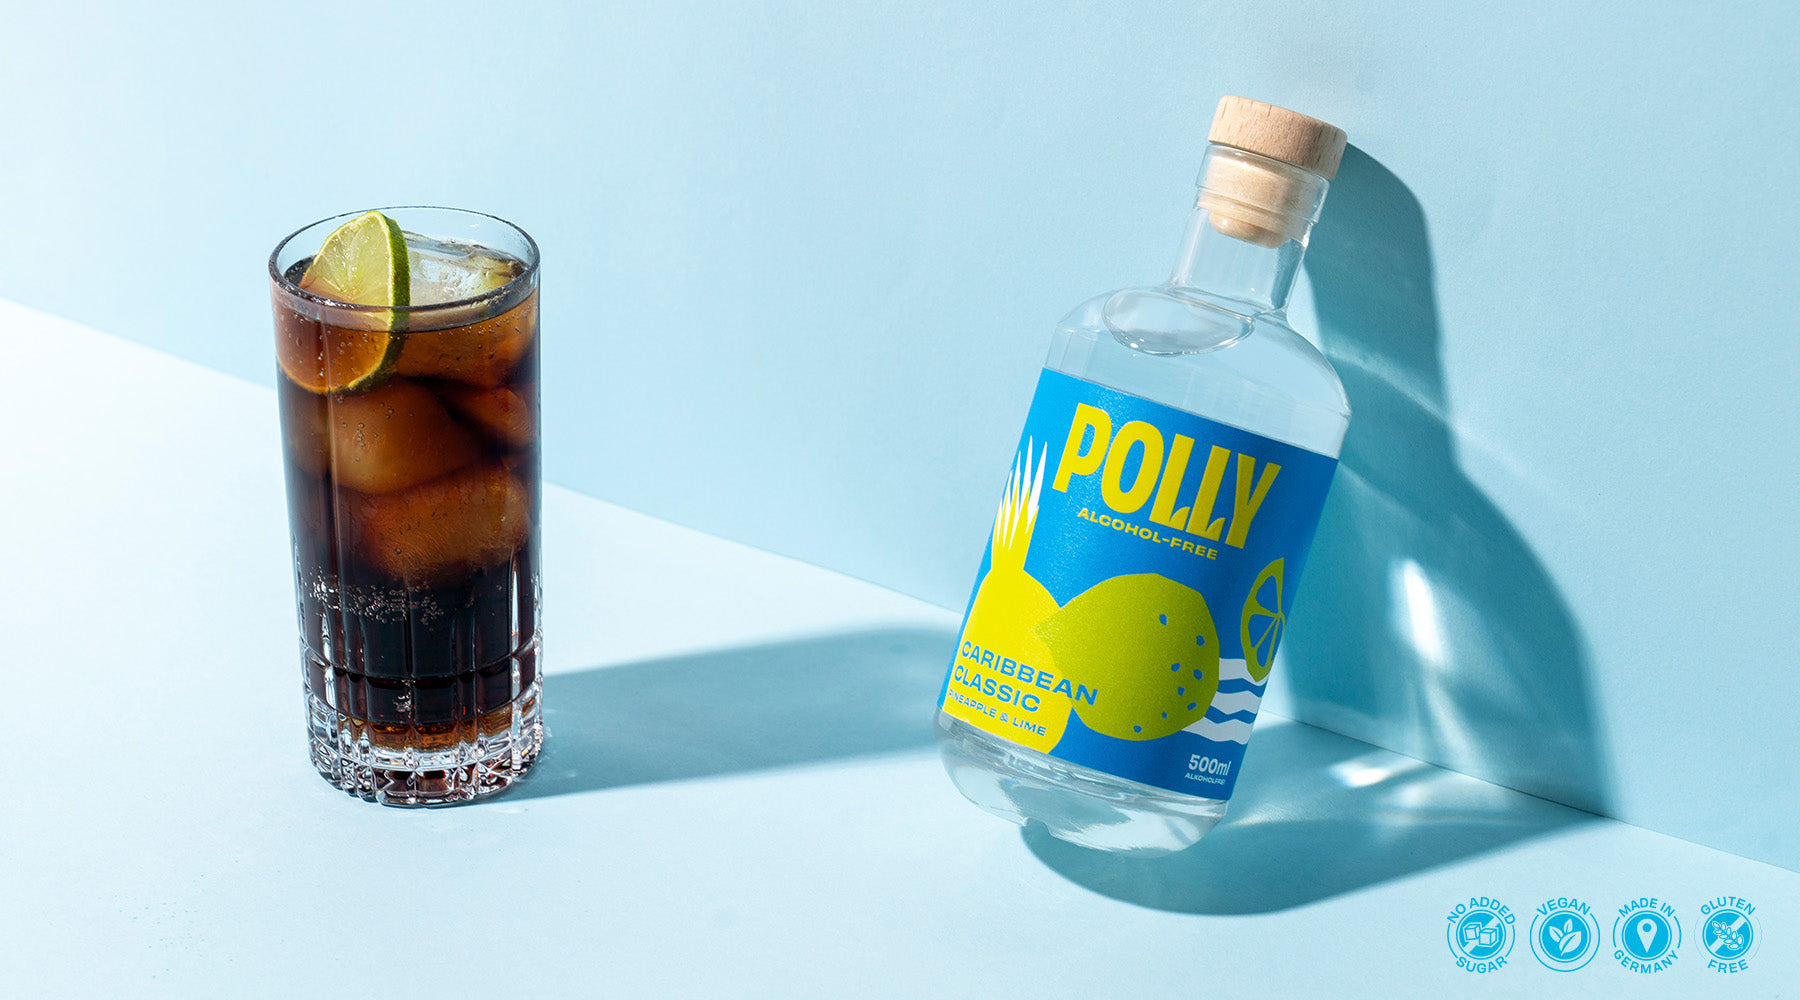 POLLY Caribbean Classic - Alkoholfreie Alternative zu Rum